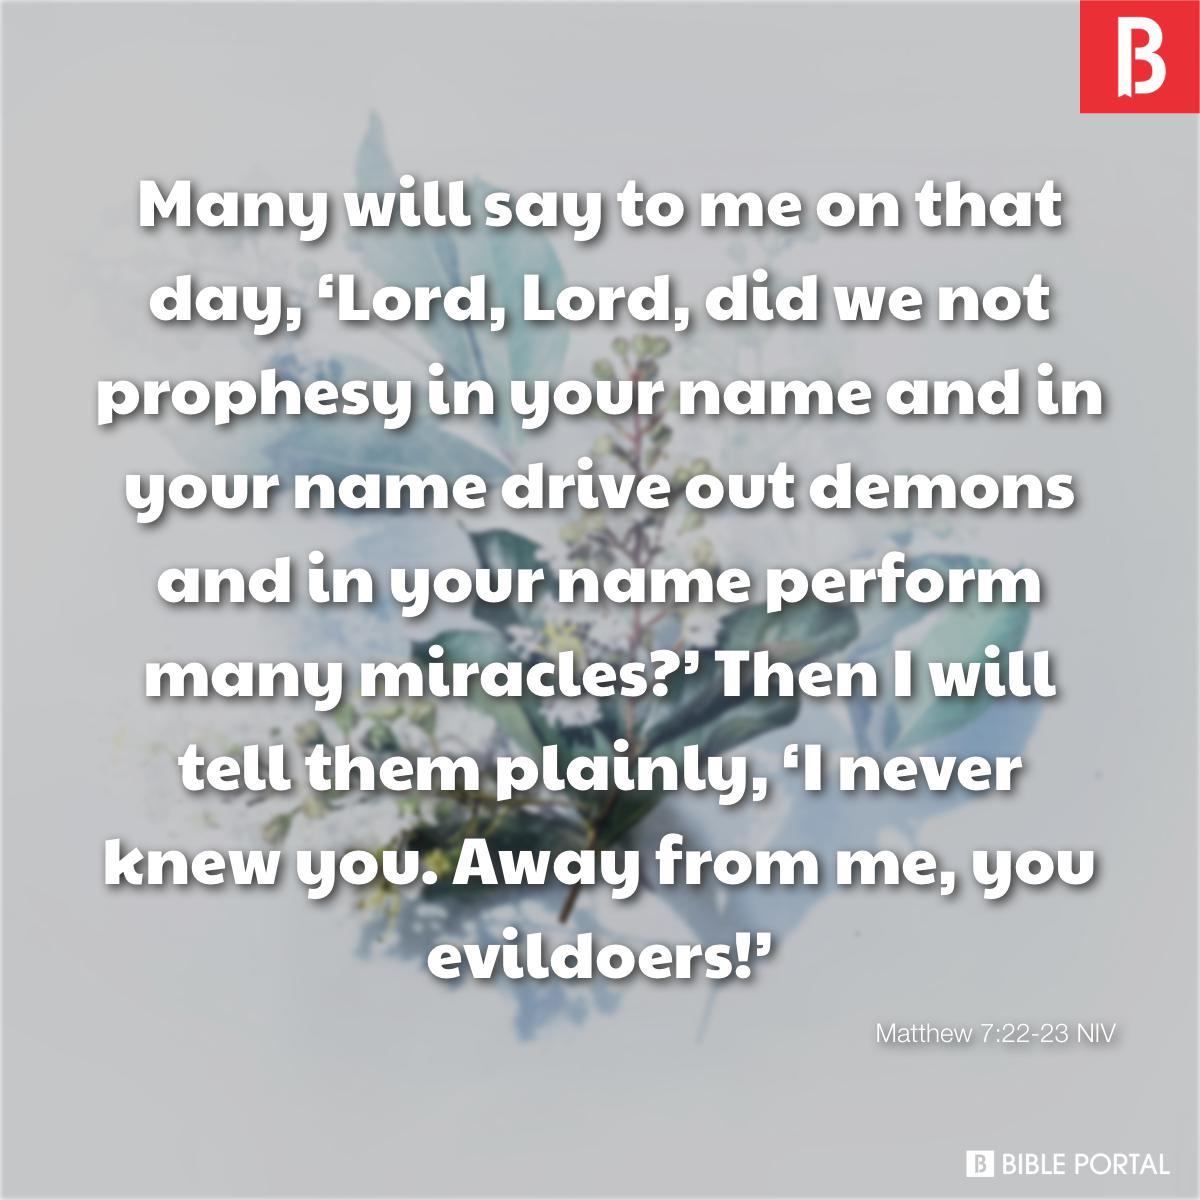 Matthew 7:22-23 NIV